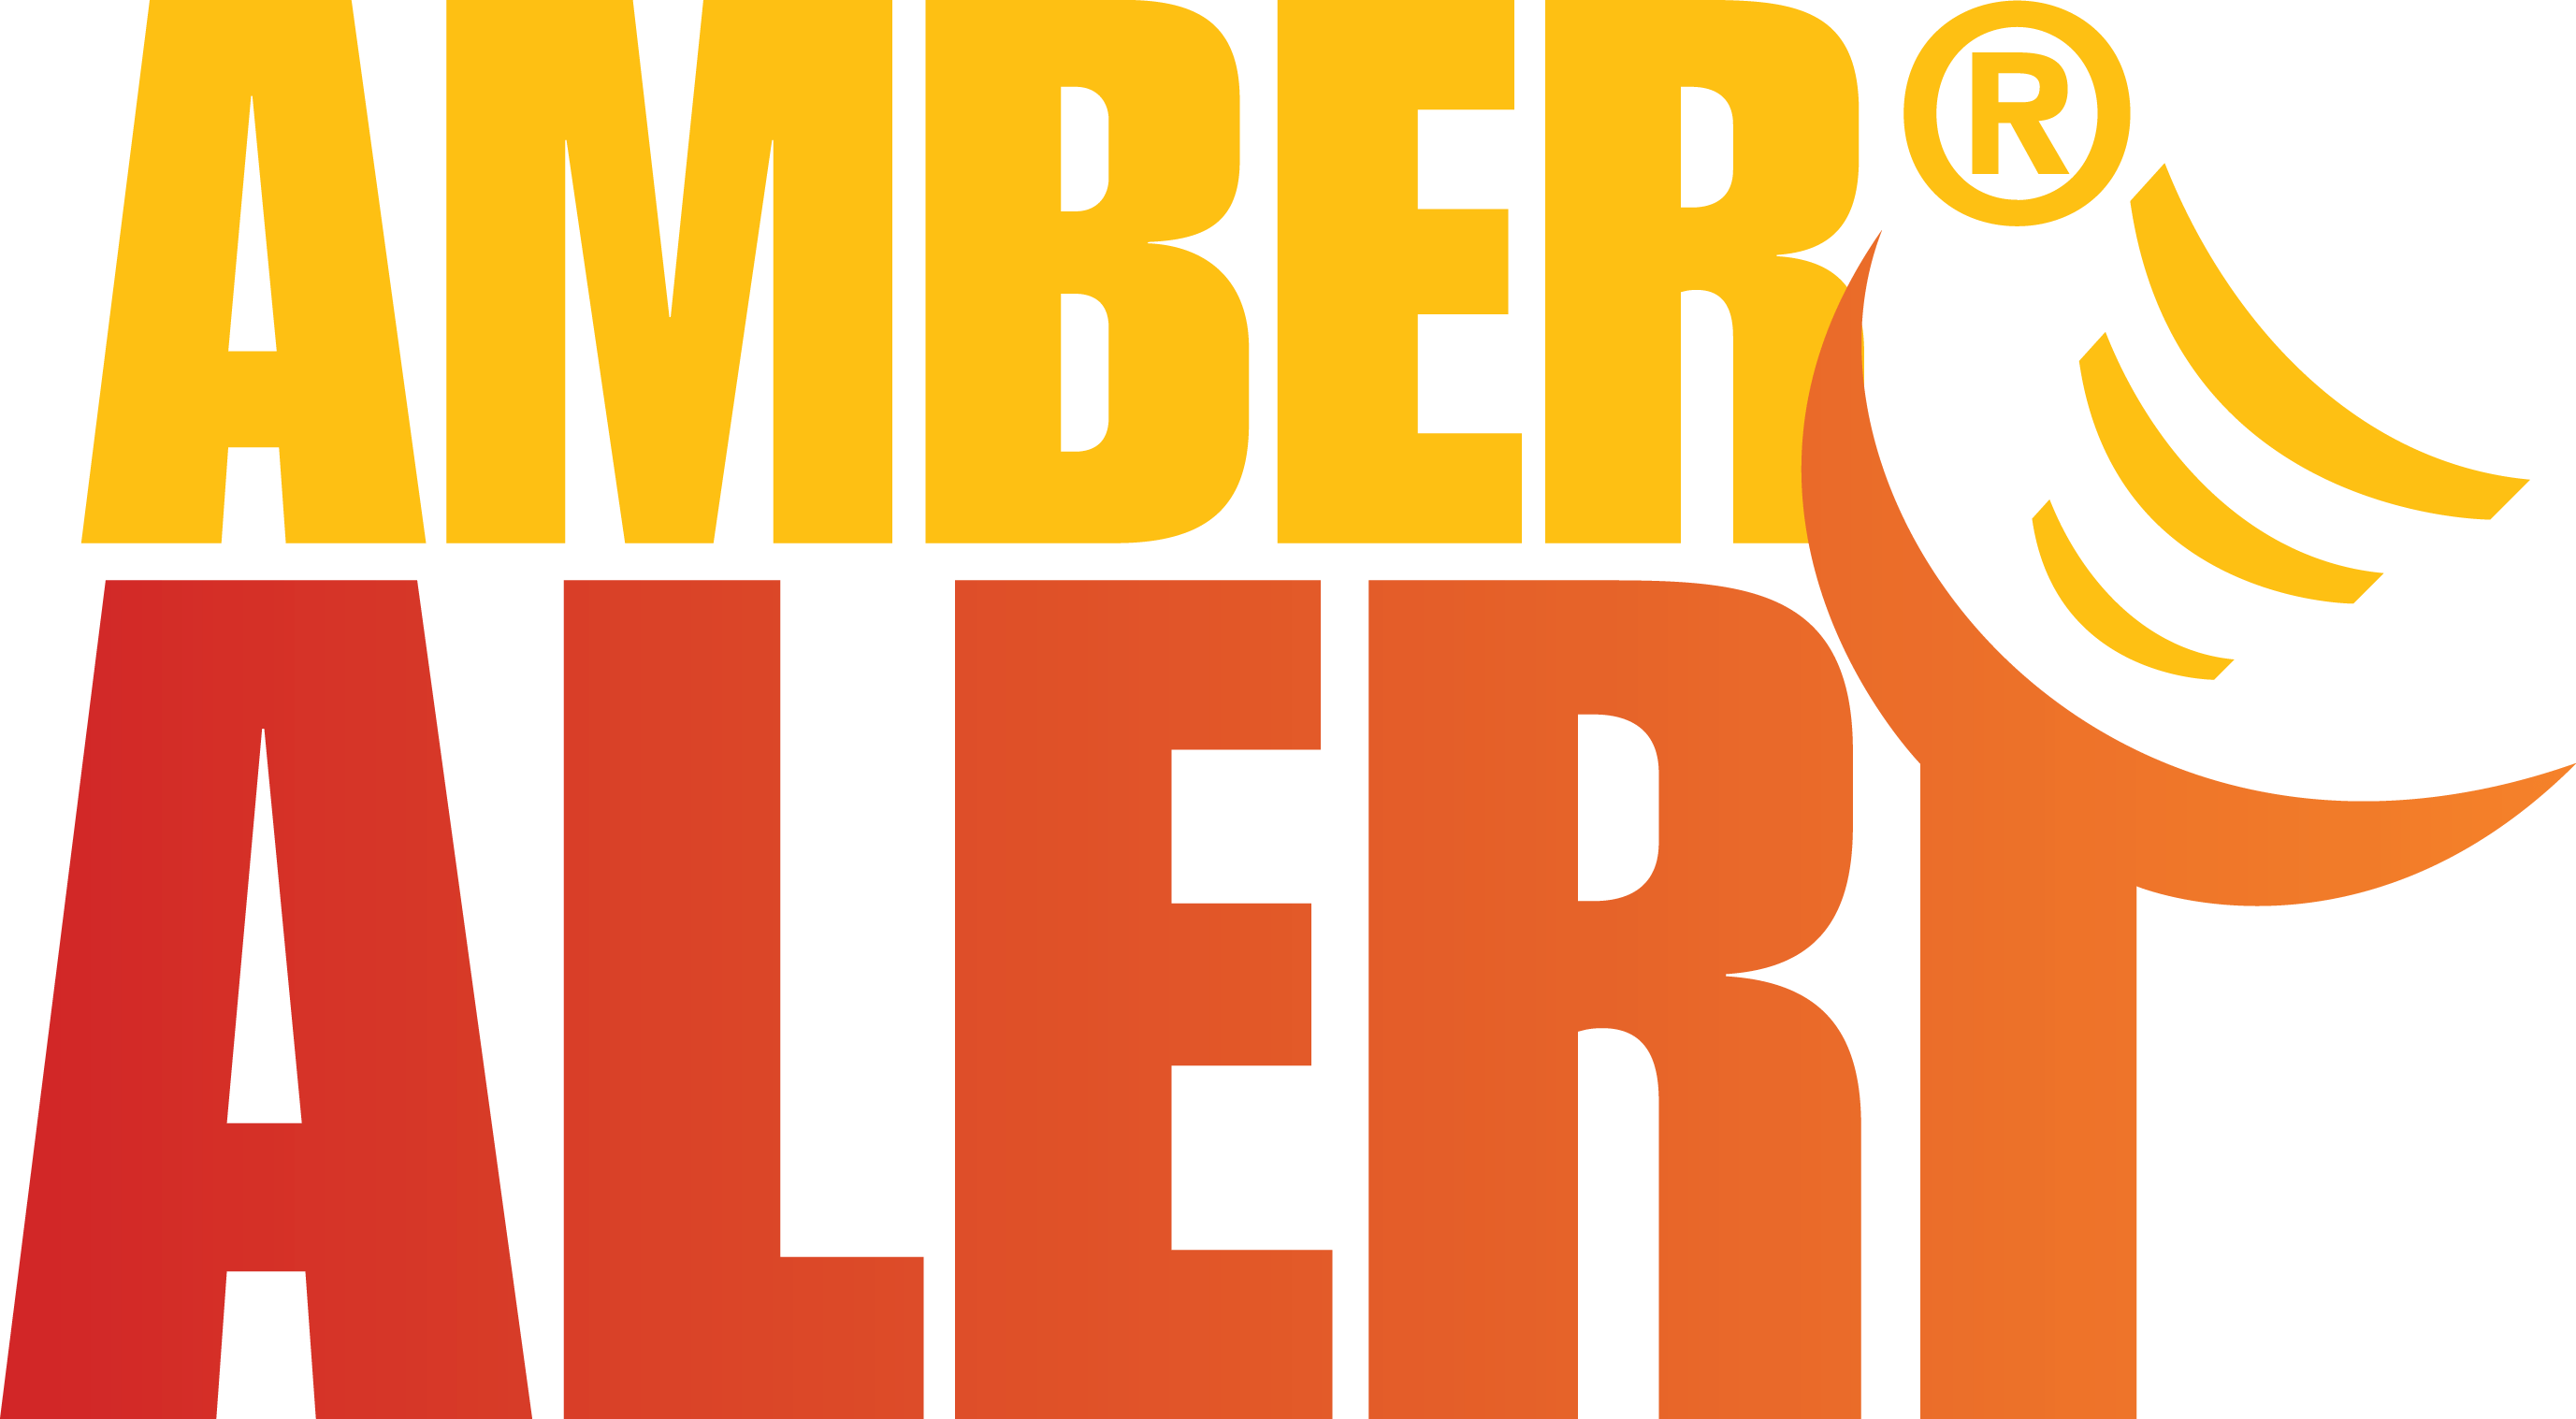 UPDATE: Amber Alert cancelled